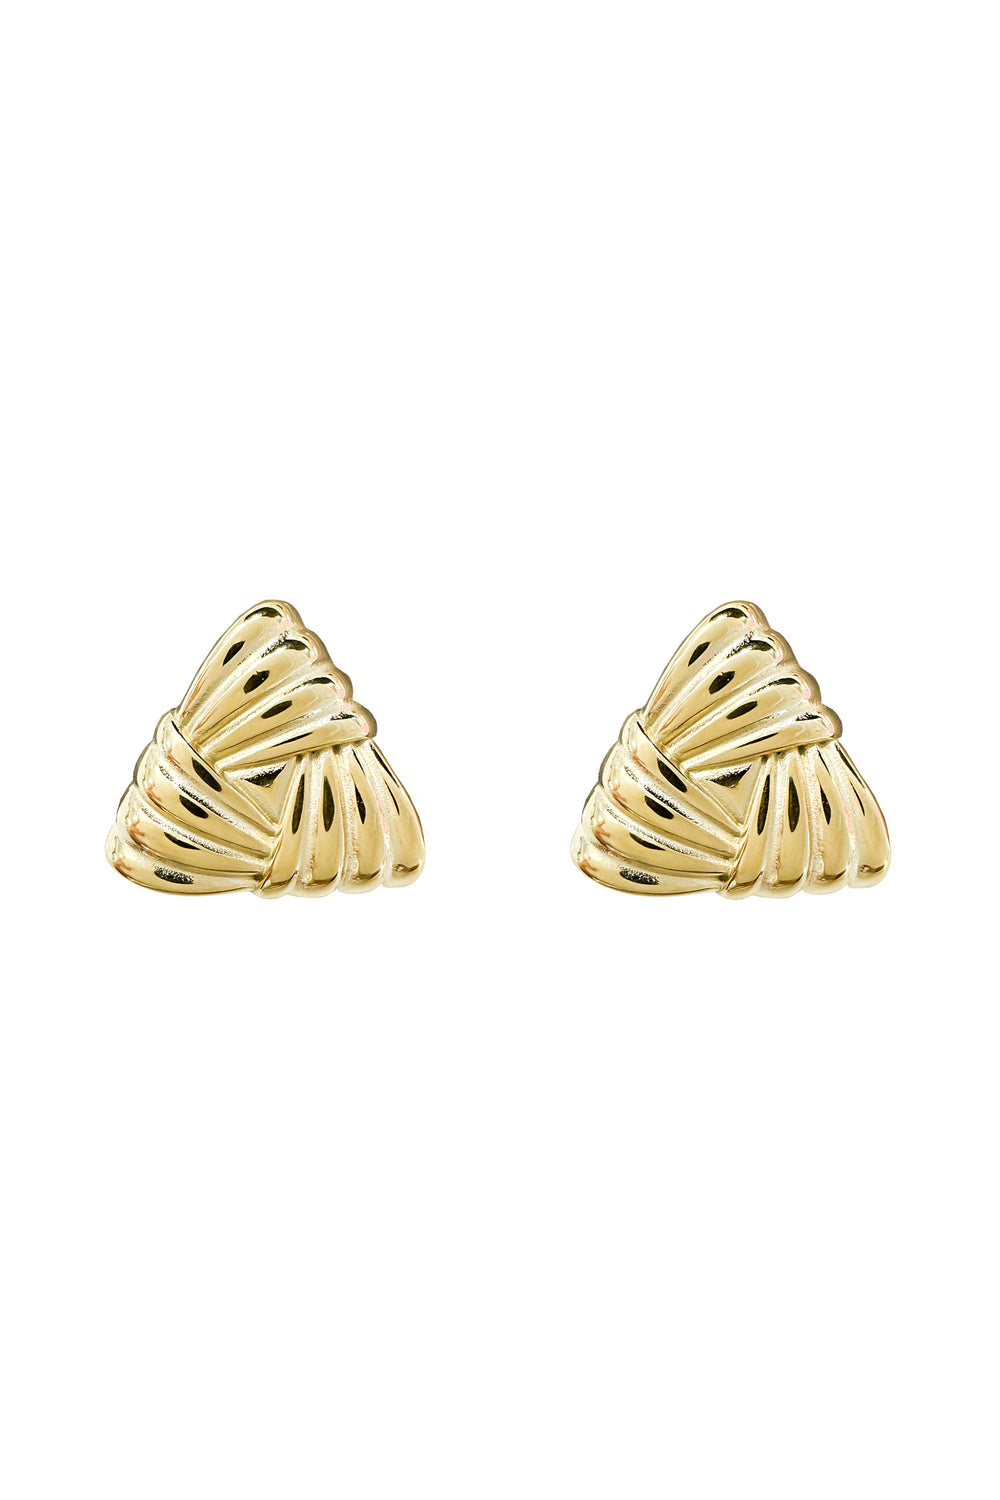 Elyse Gold Triangle Earrings